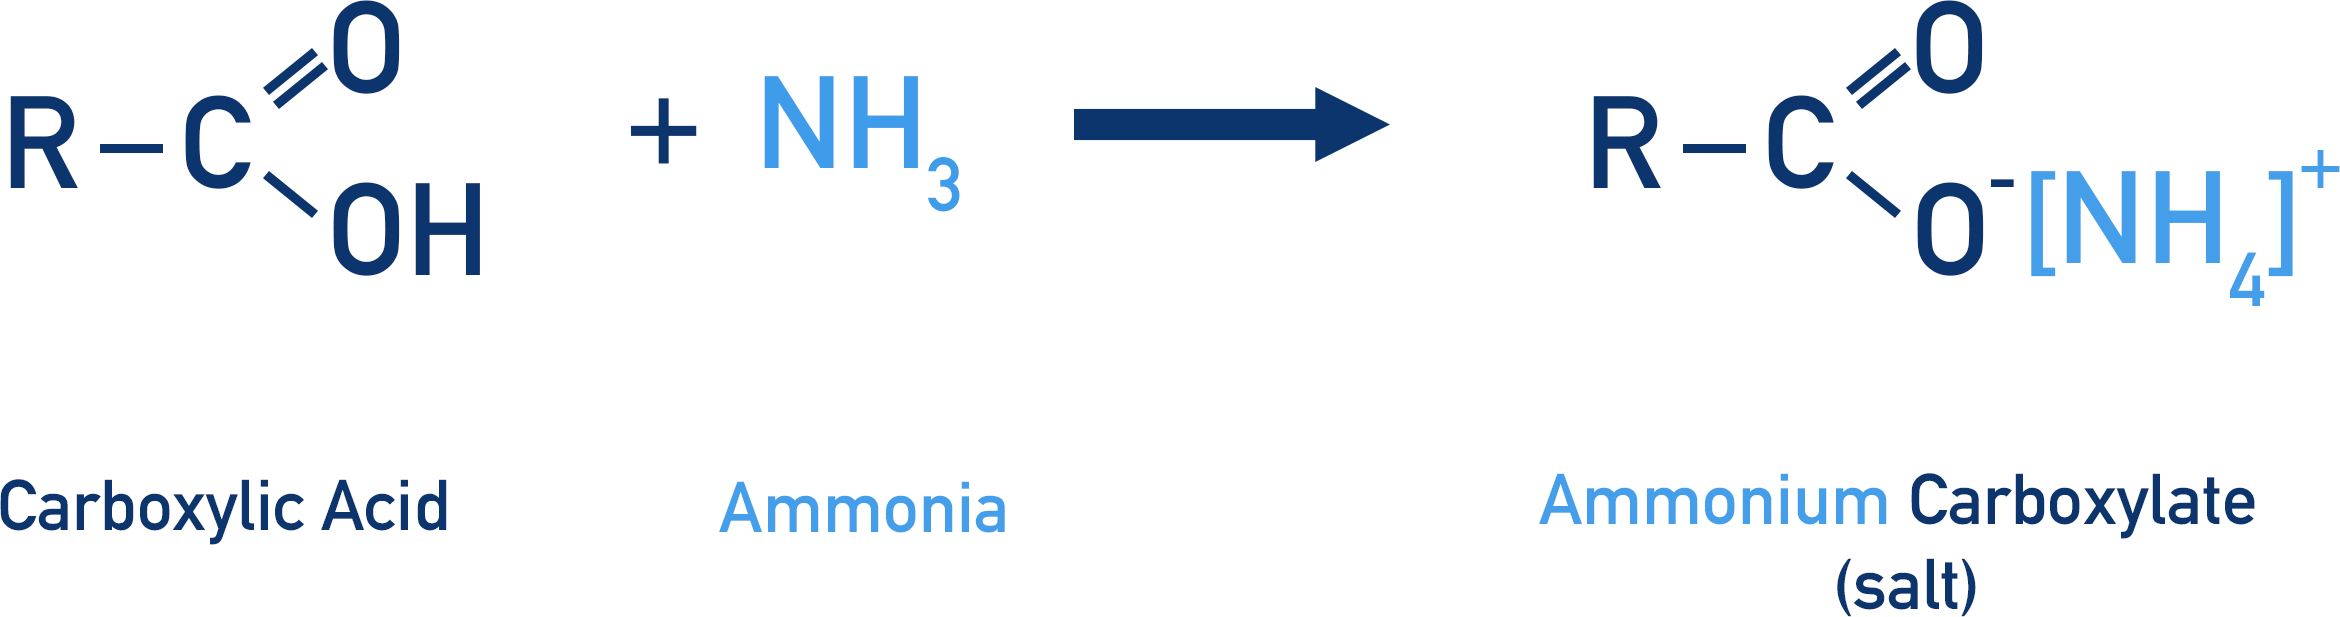 carboxylic acid and ammonia to form ammonium carboxylate